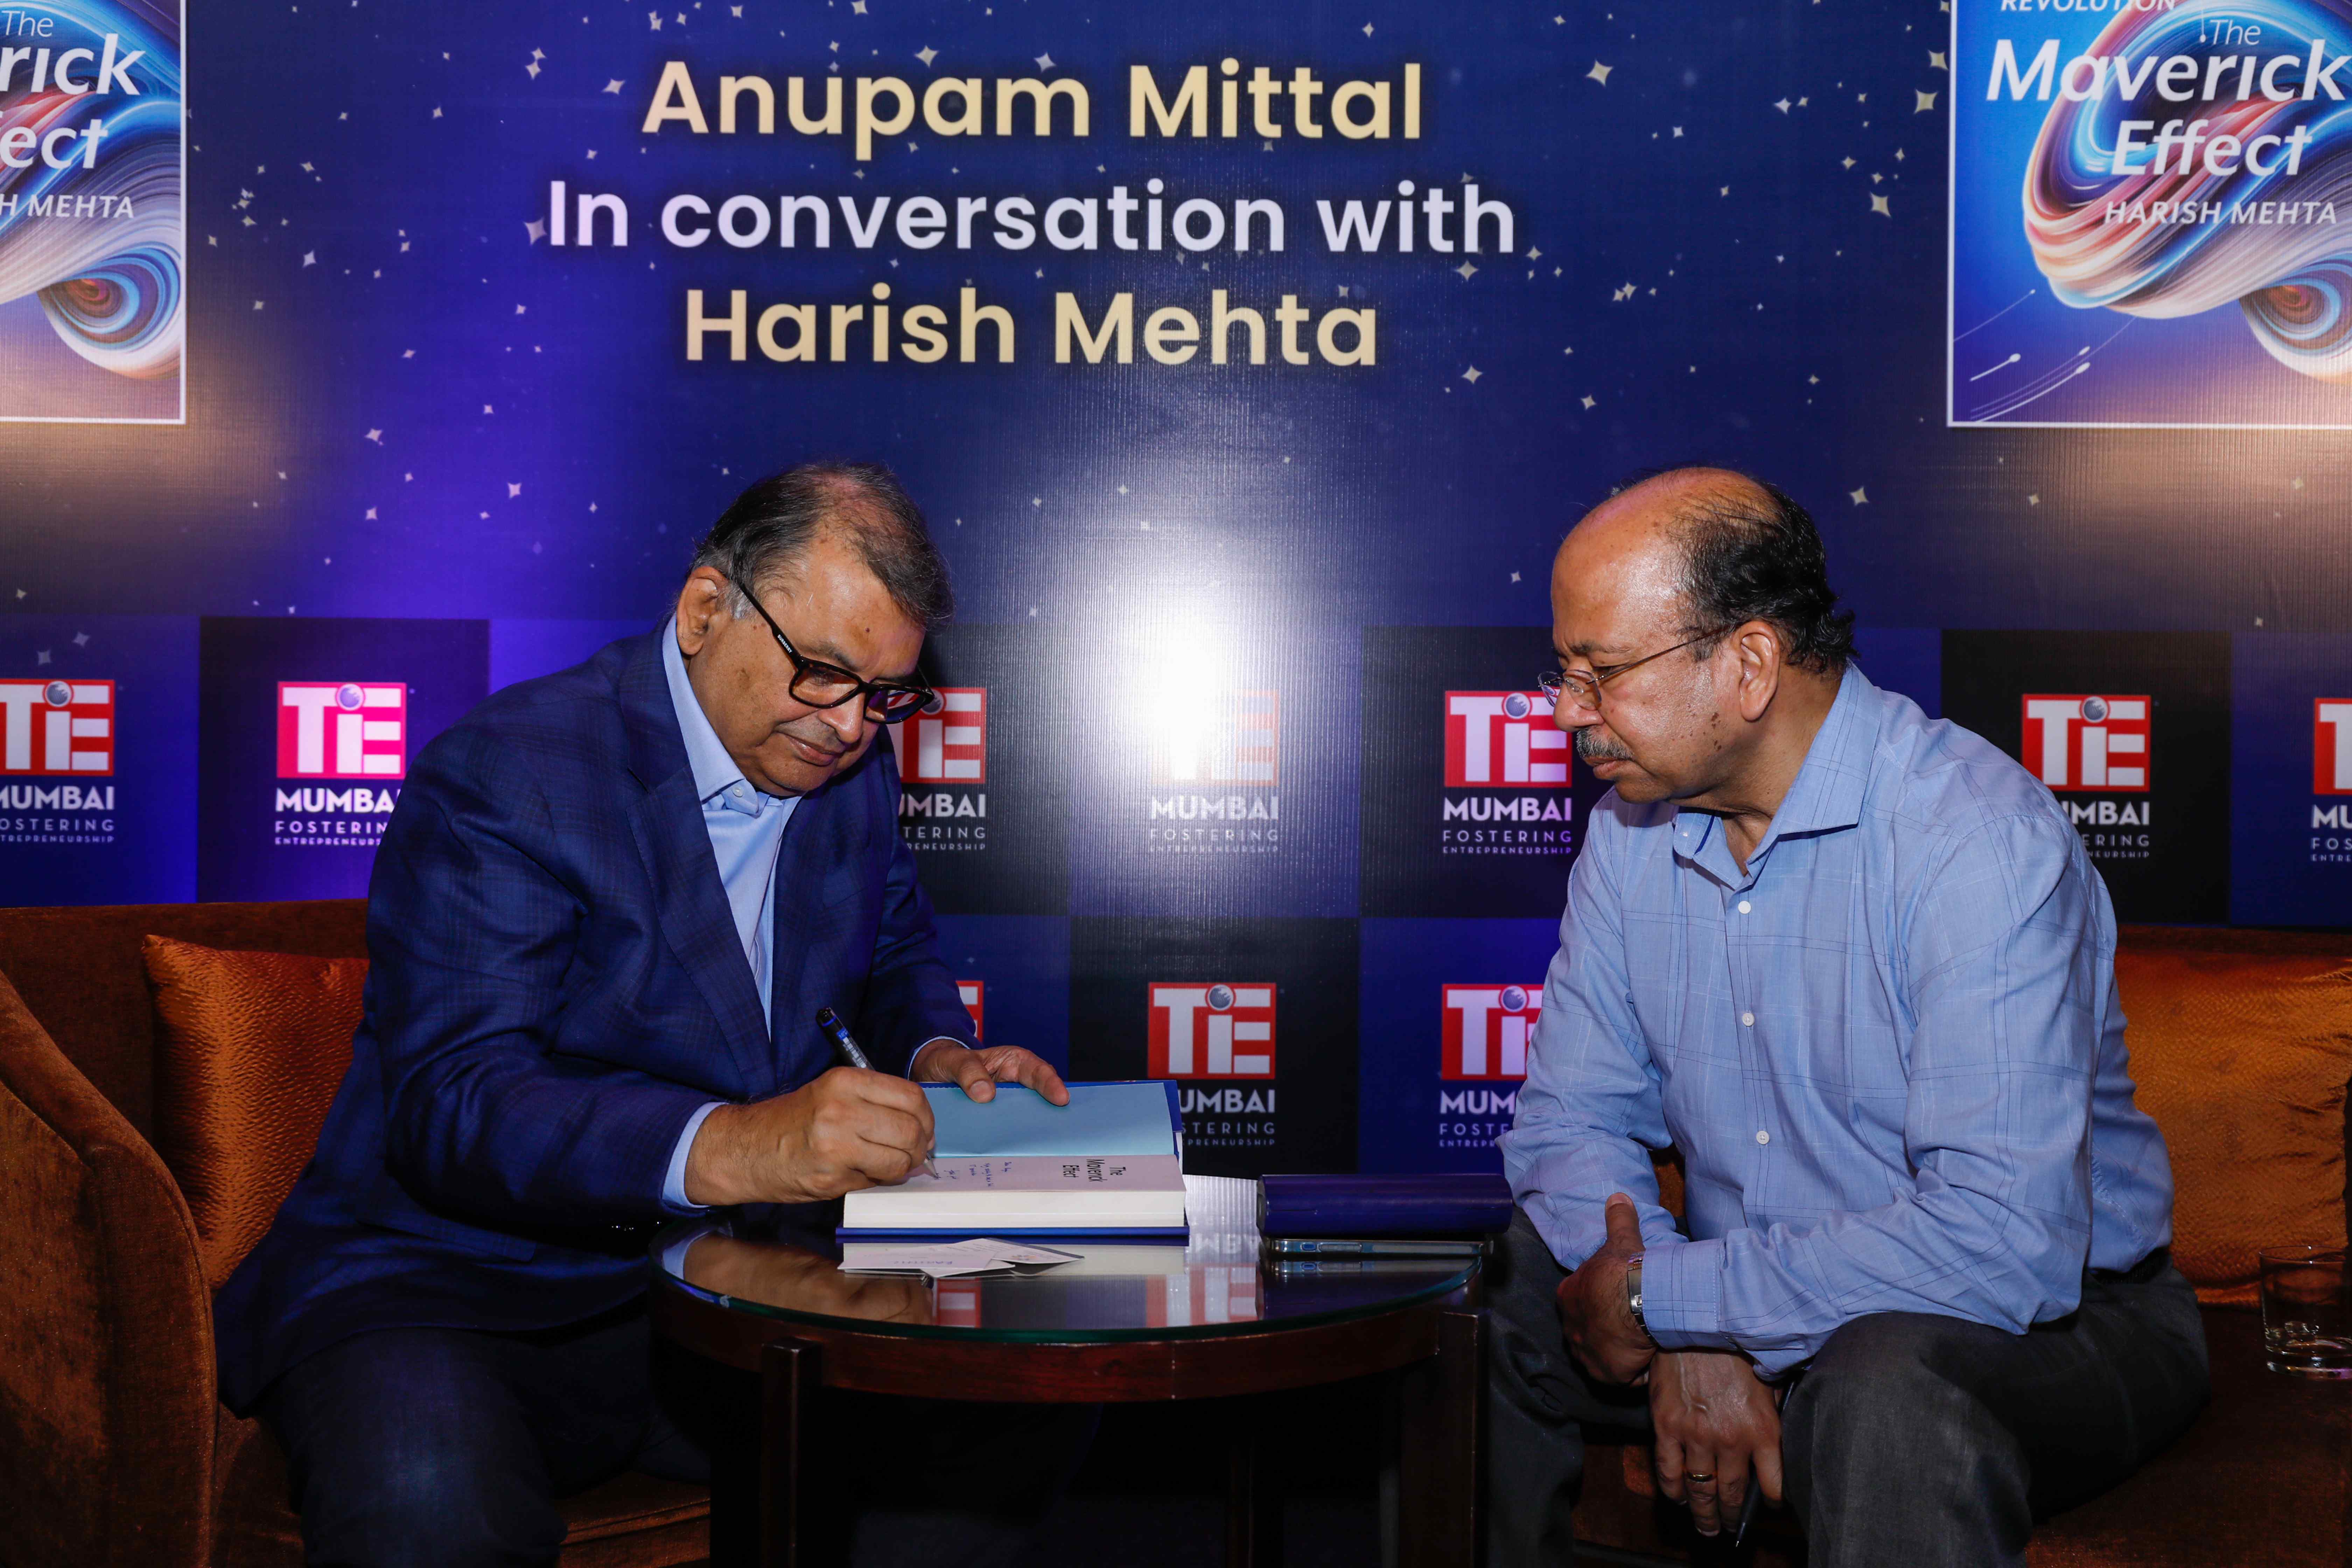 TiE Mumbai with Anupam Mittal